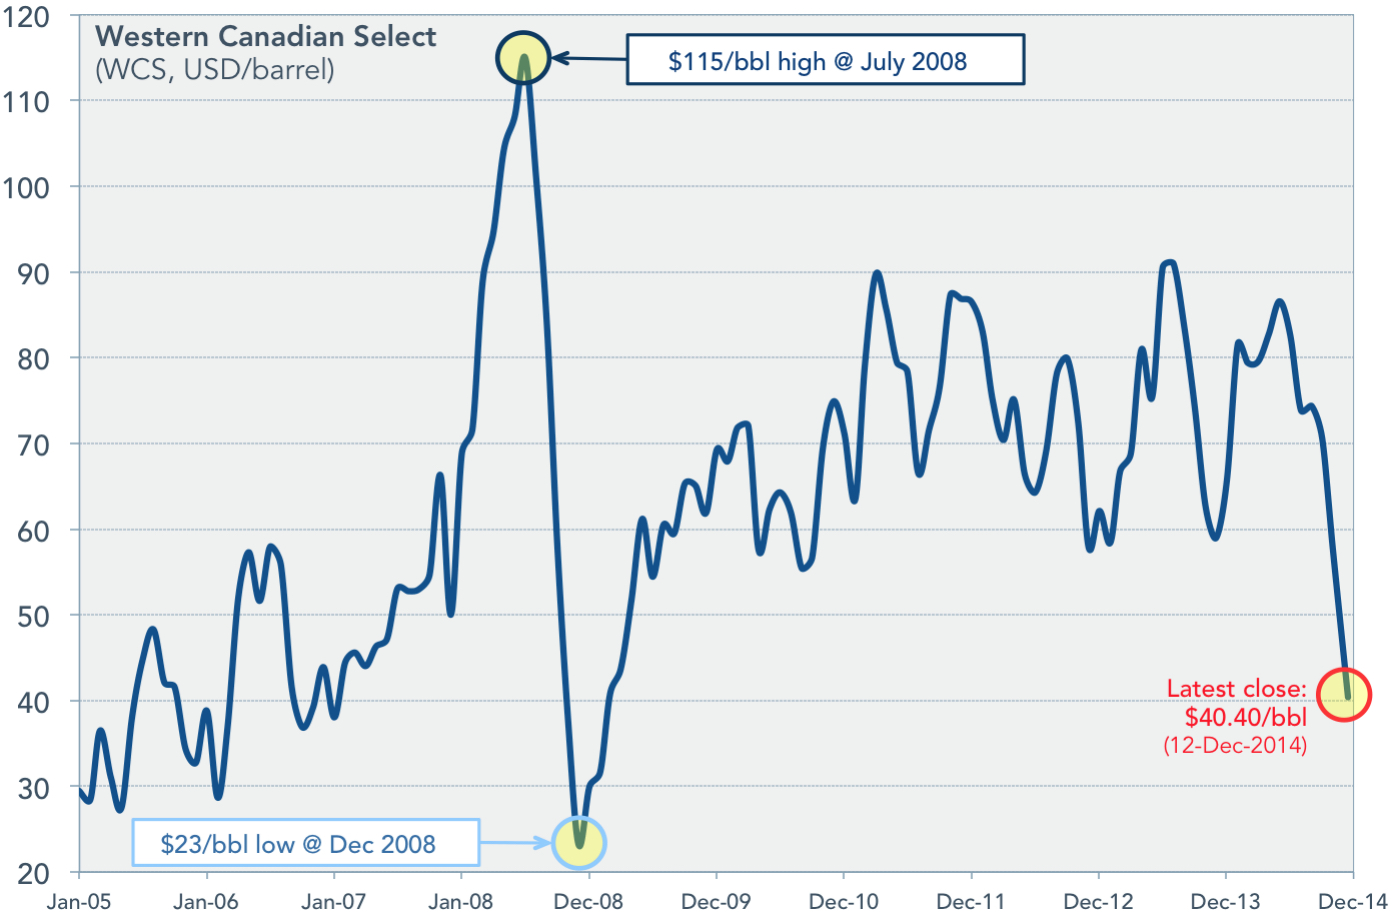 Oil Price Chart Canada